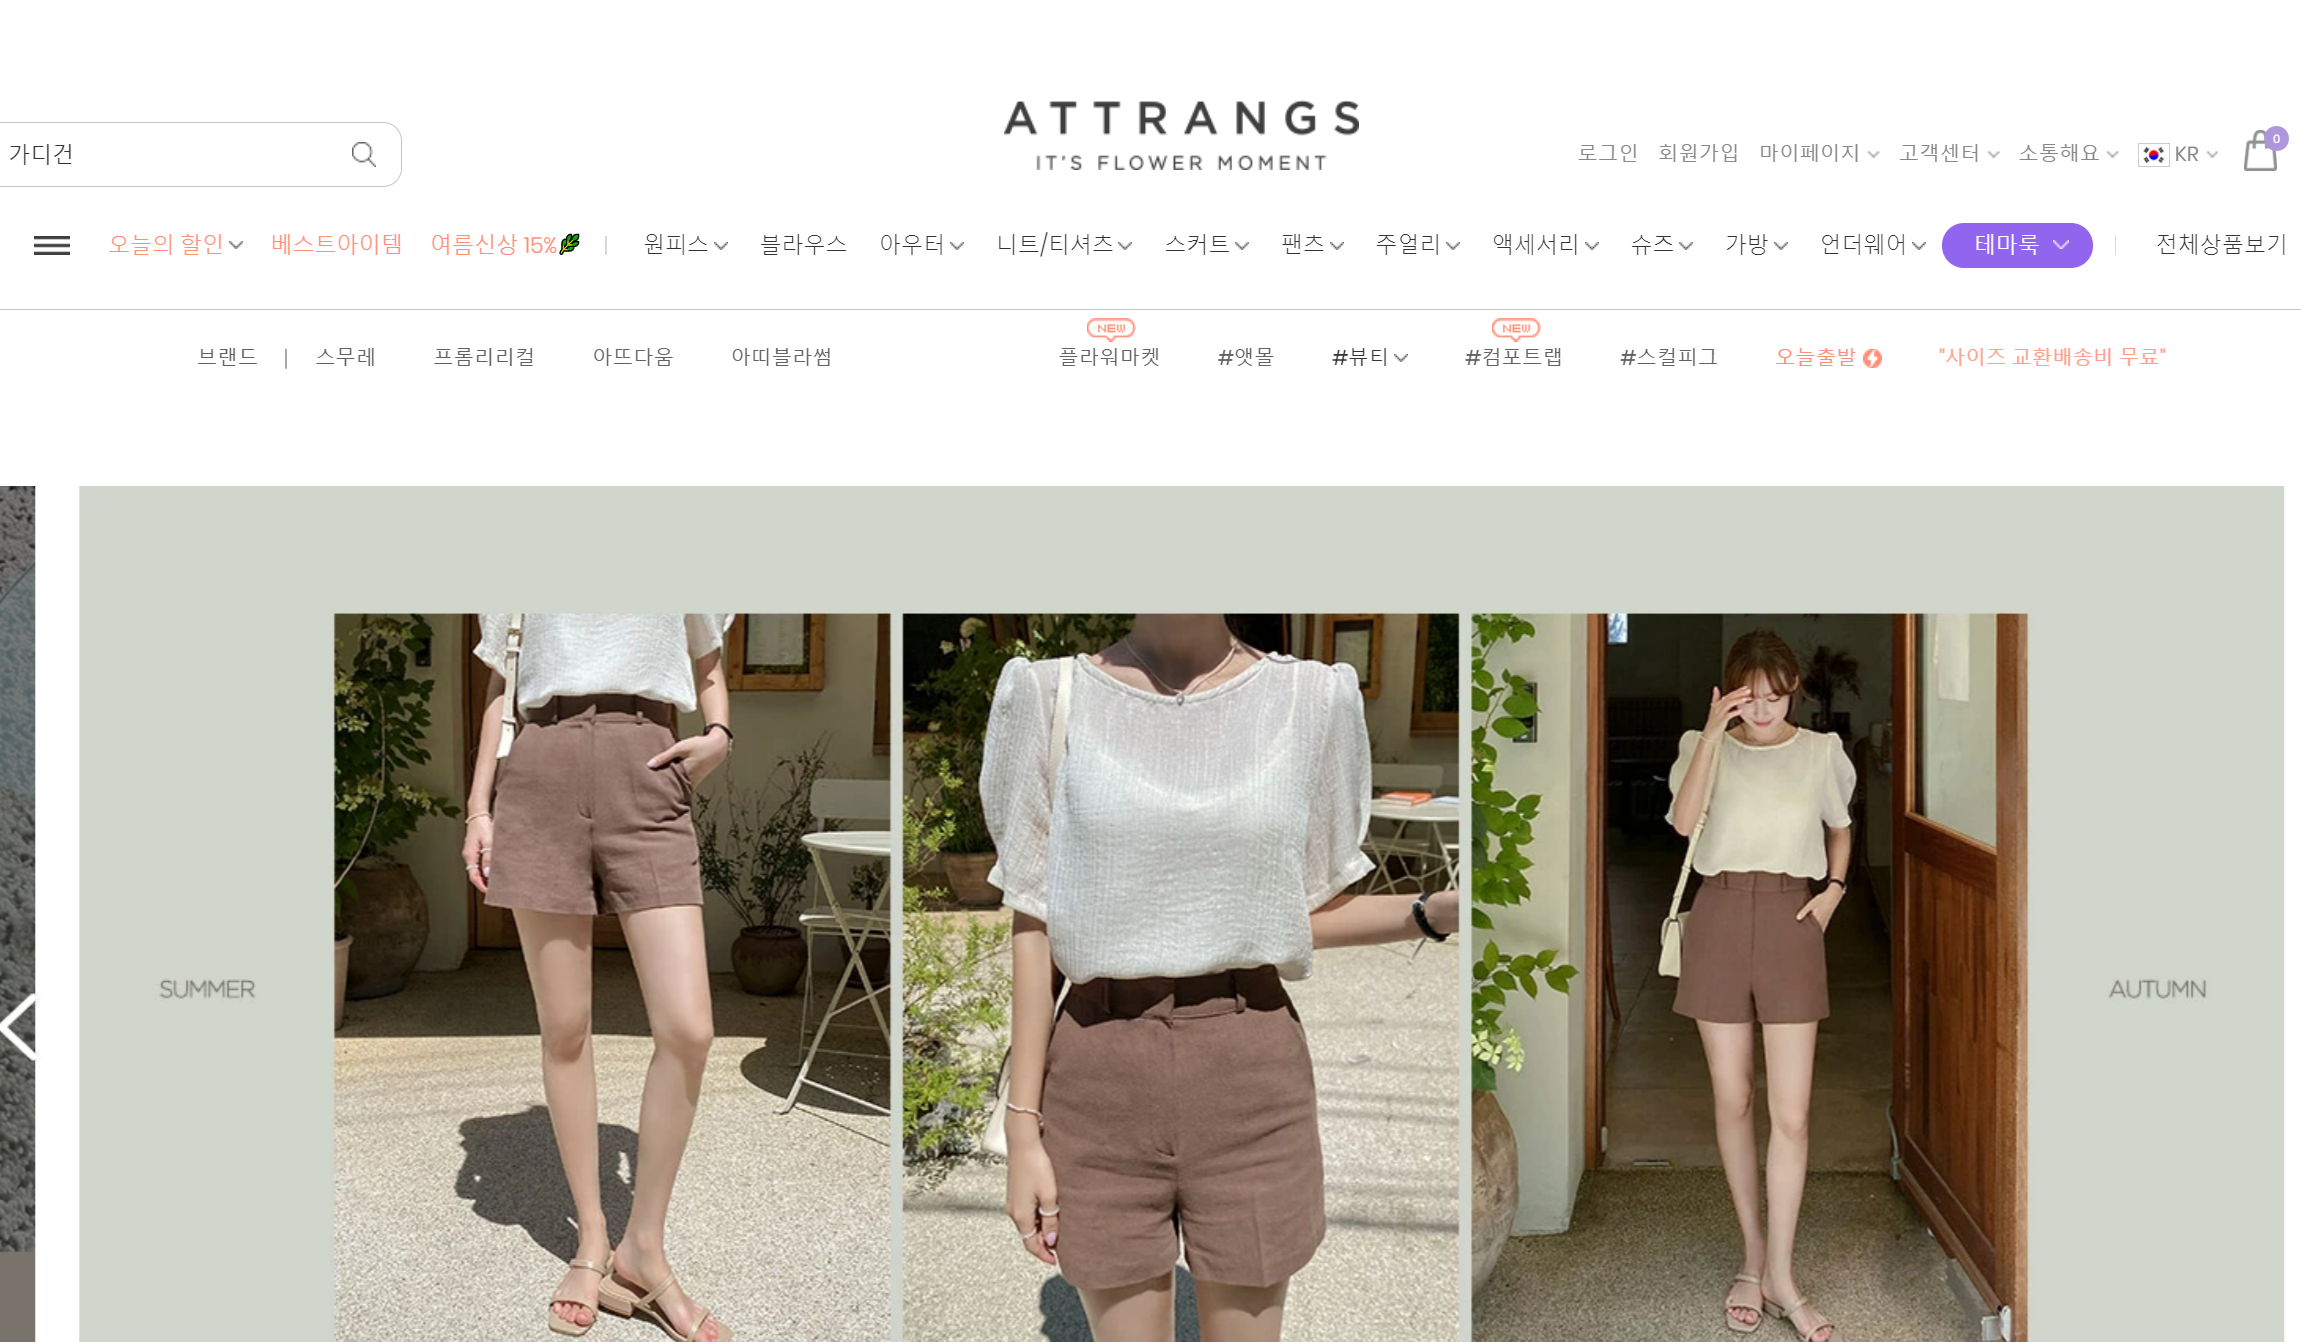 korea online shopping - attrangs